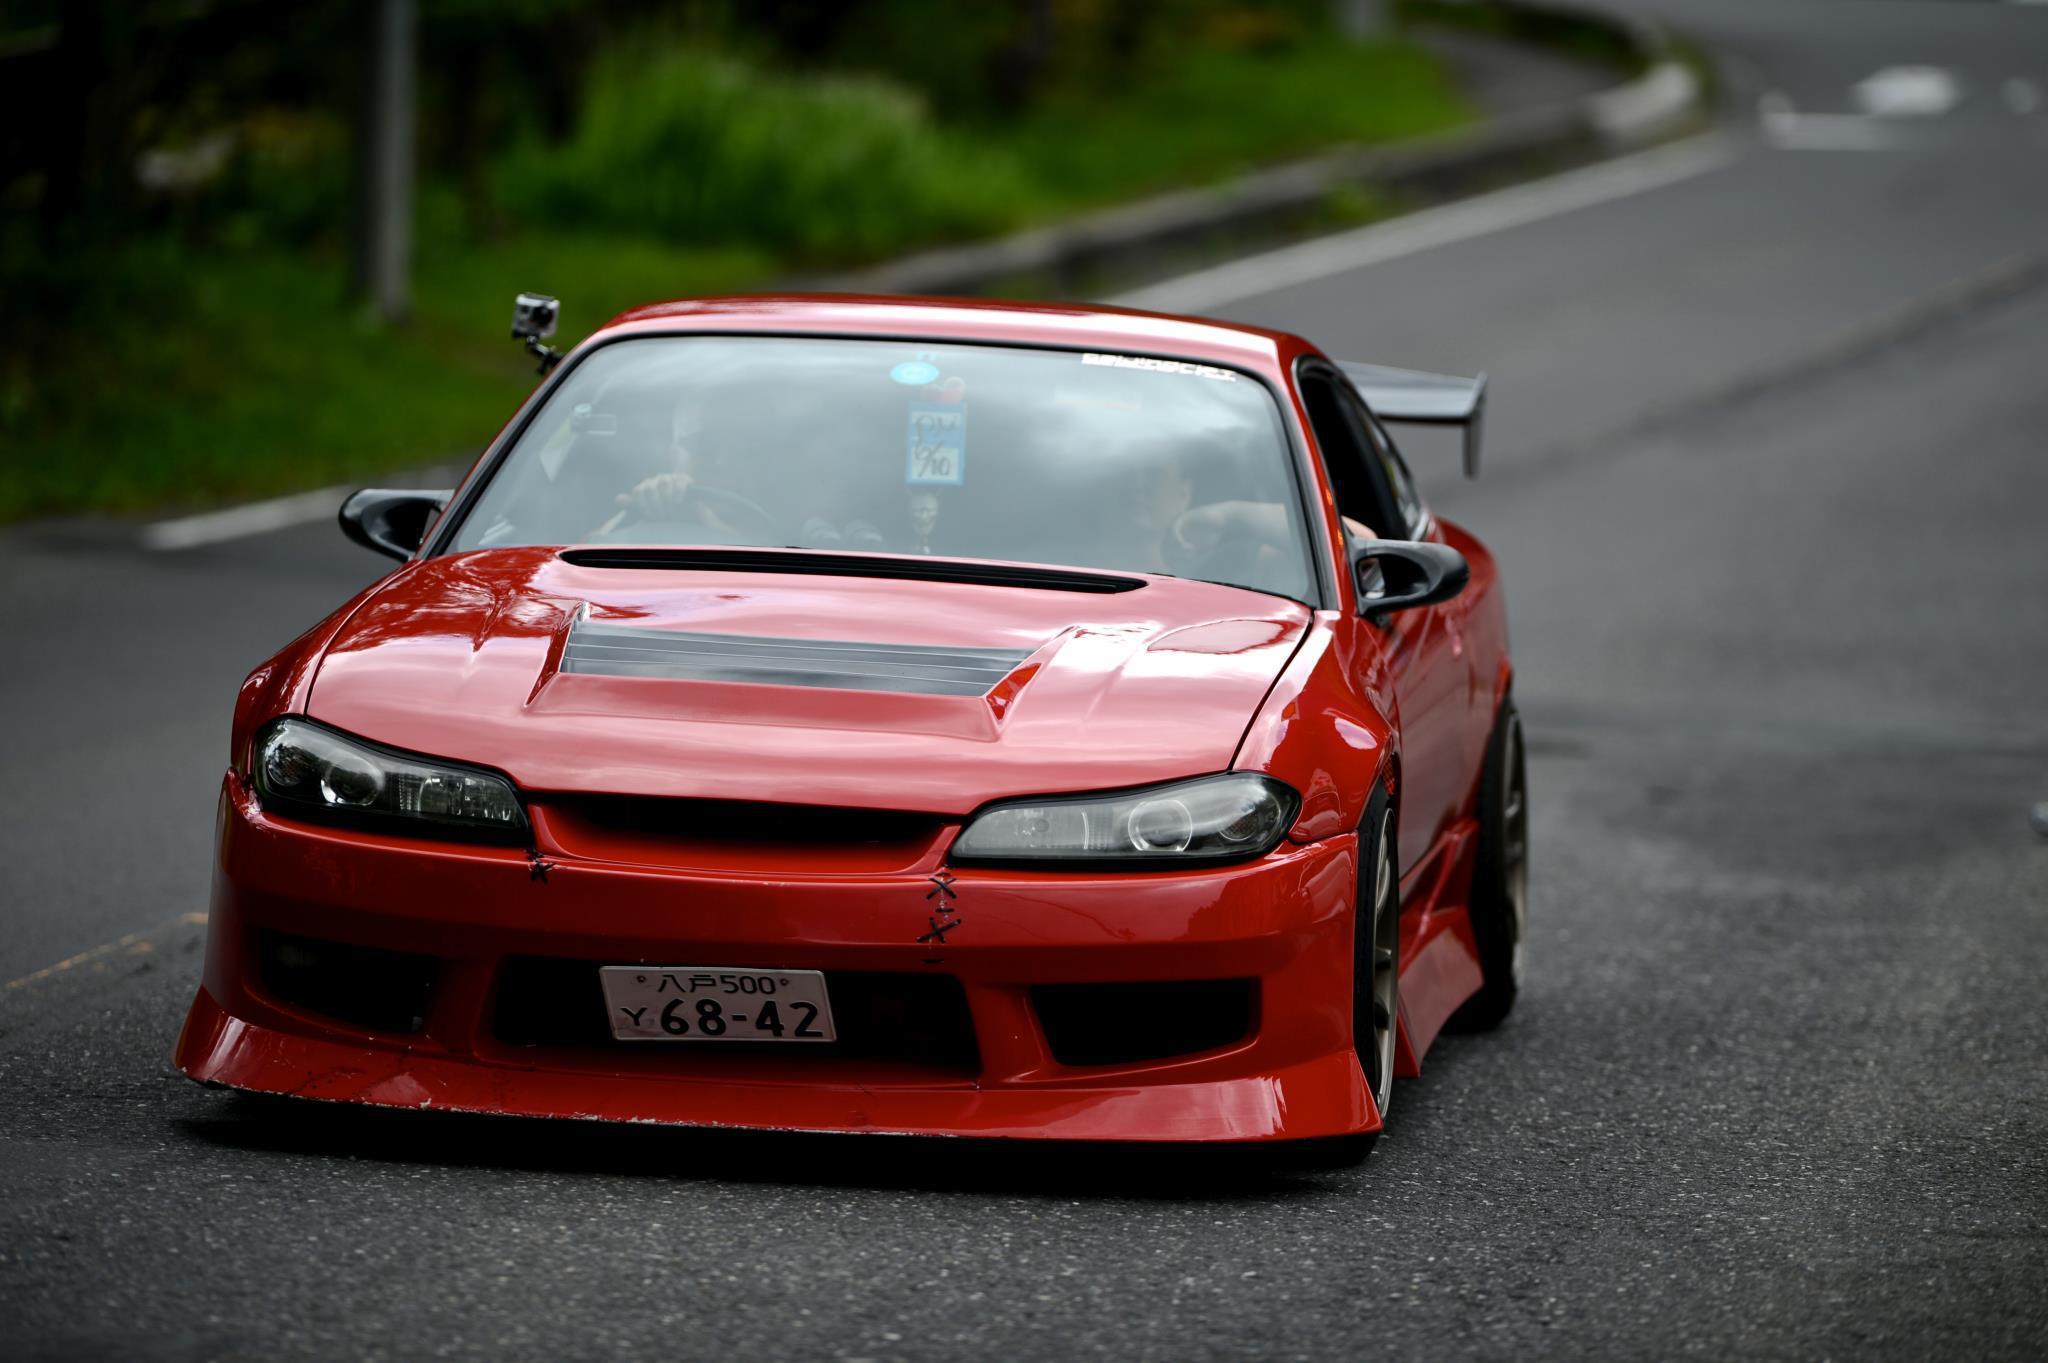 Silvia s15 купить. Nissan Silvia s15 Nismo. Nissan Silvia s15 Red.